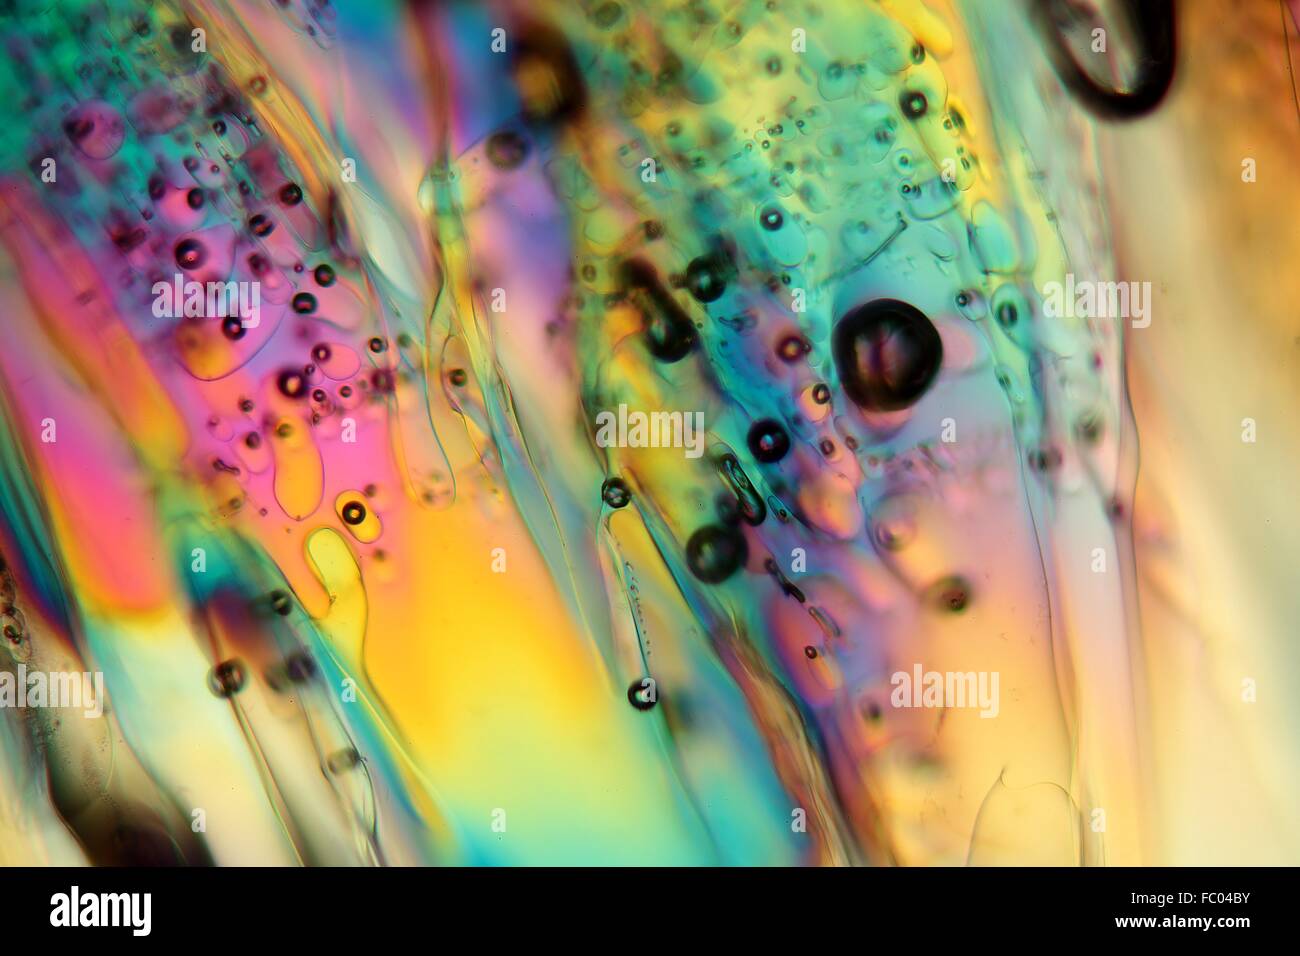 Ice under a microscope Stock Photo